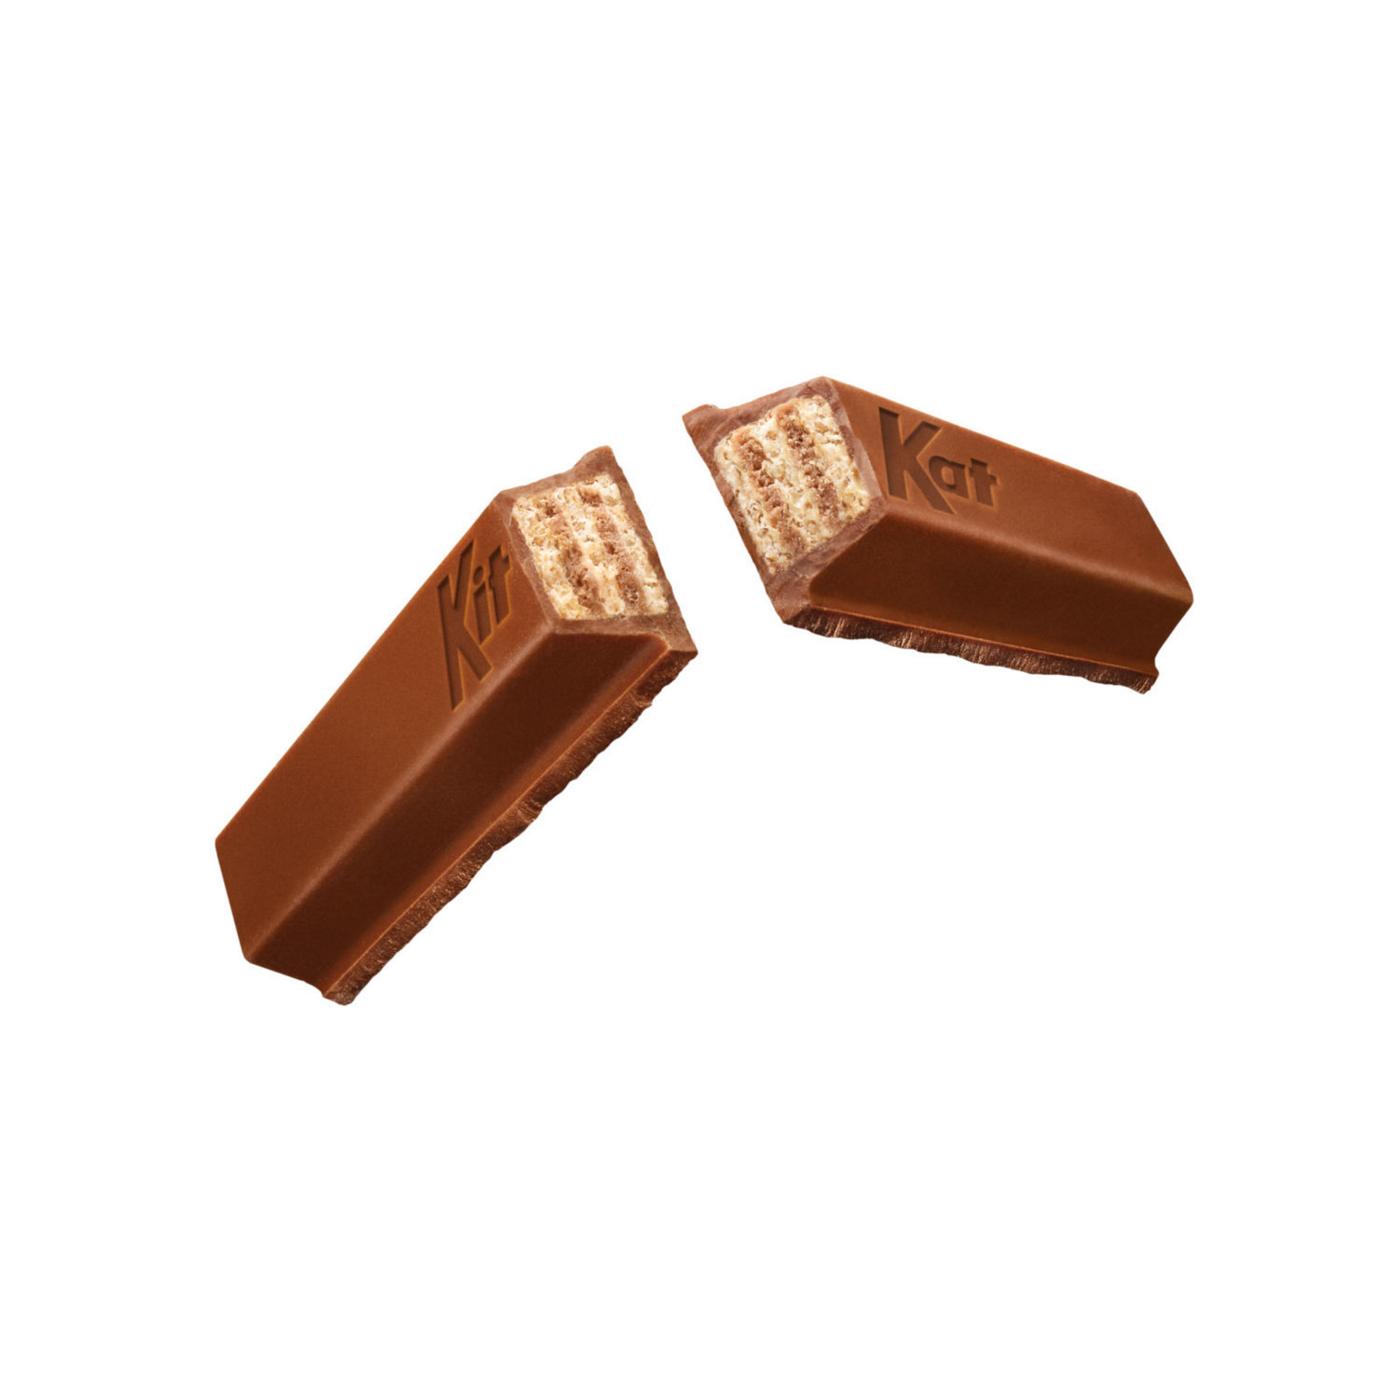 Kit Kat Milk Chocolate Wafer Candy Bar; image 7 of 7